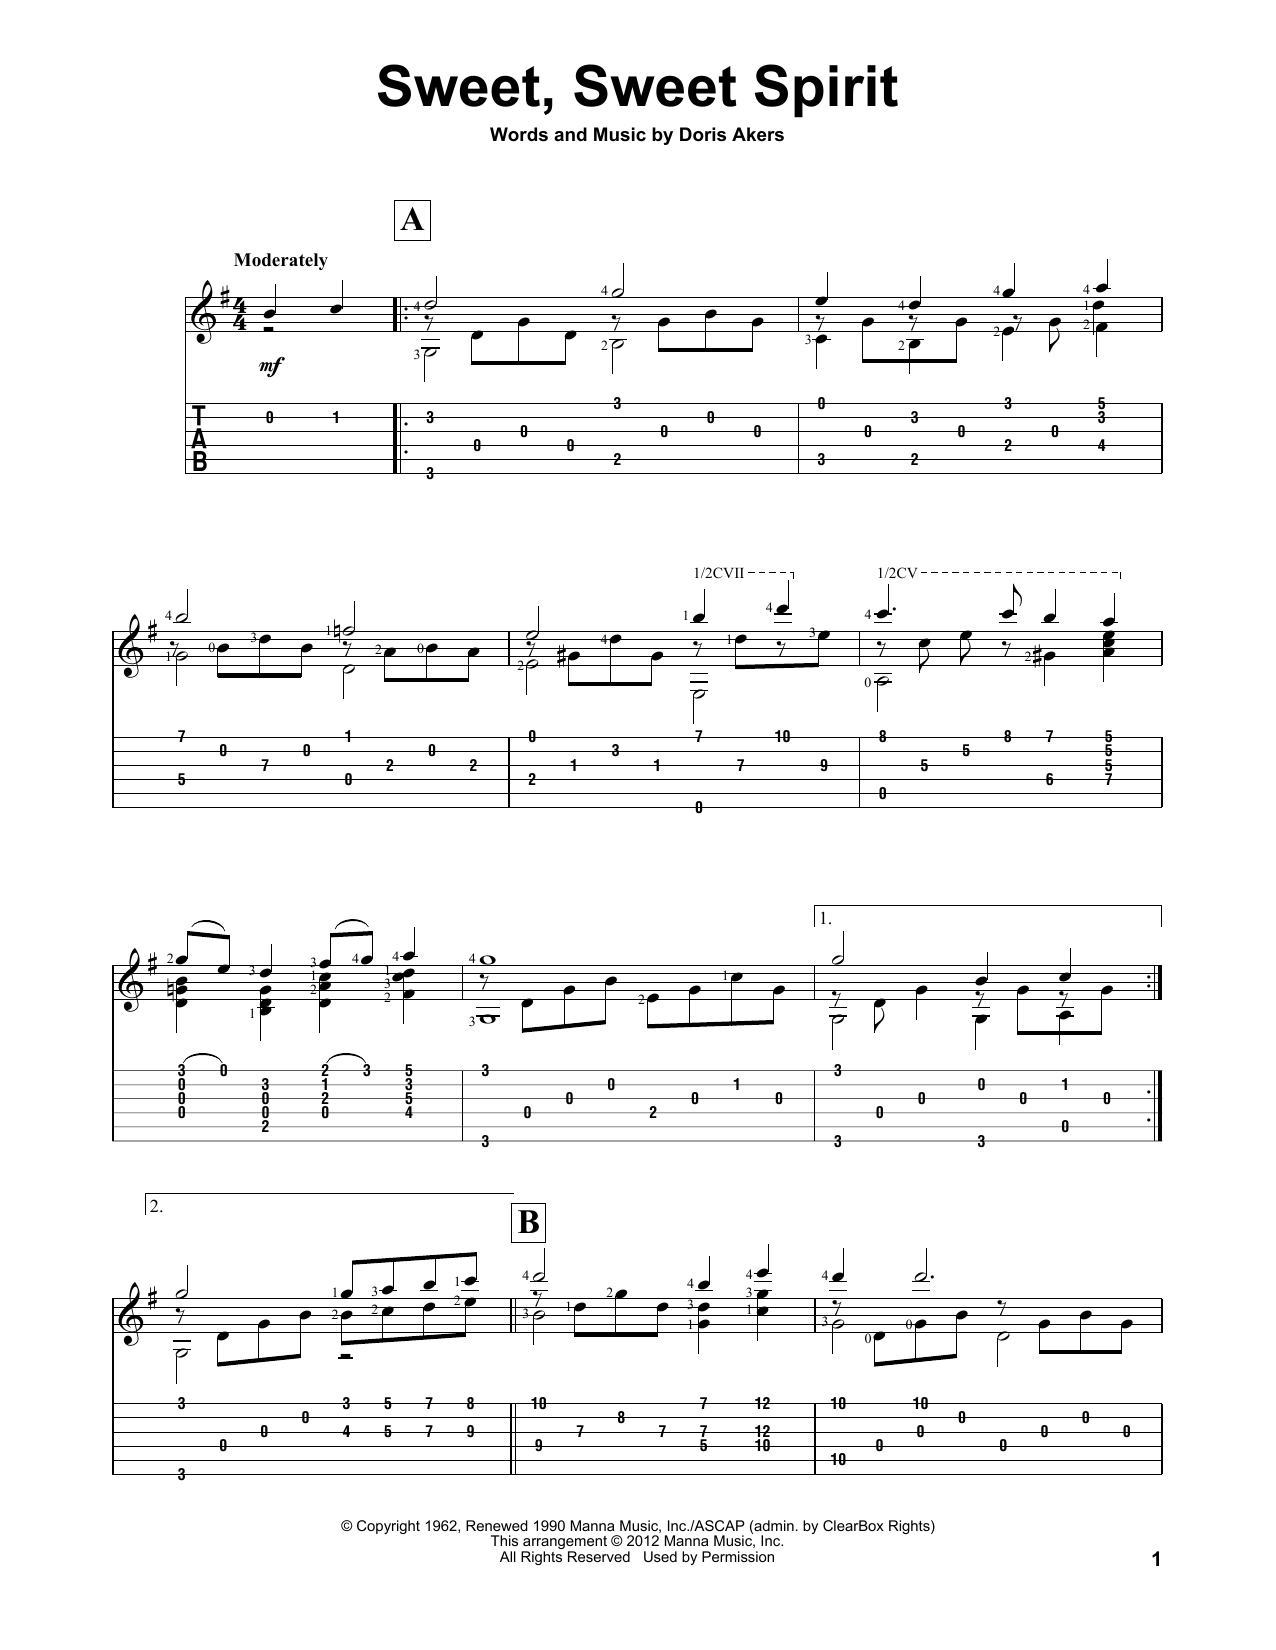 Doris Akers Sweet, Sweet Spirit Sheet Music Notes & Chords for Easy Guitar - Download or Print PDF